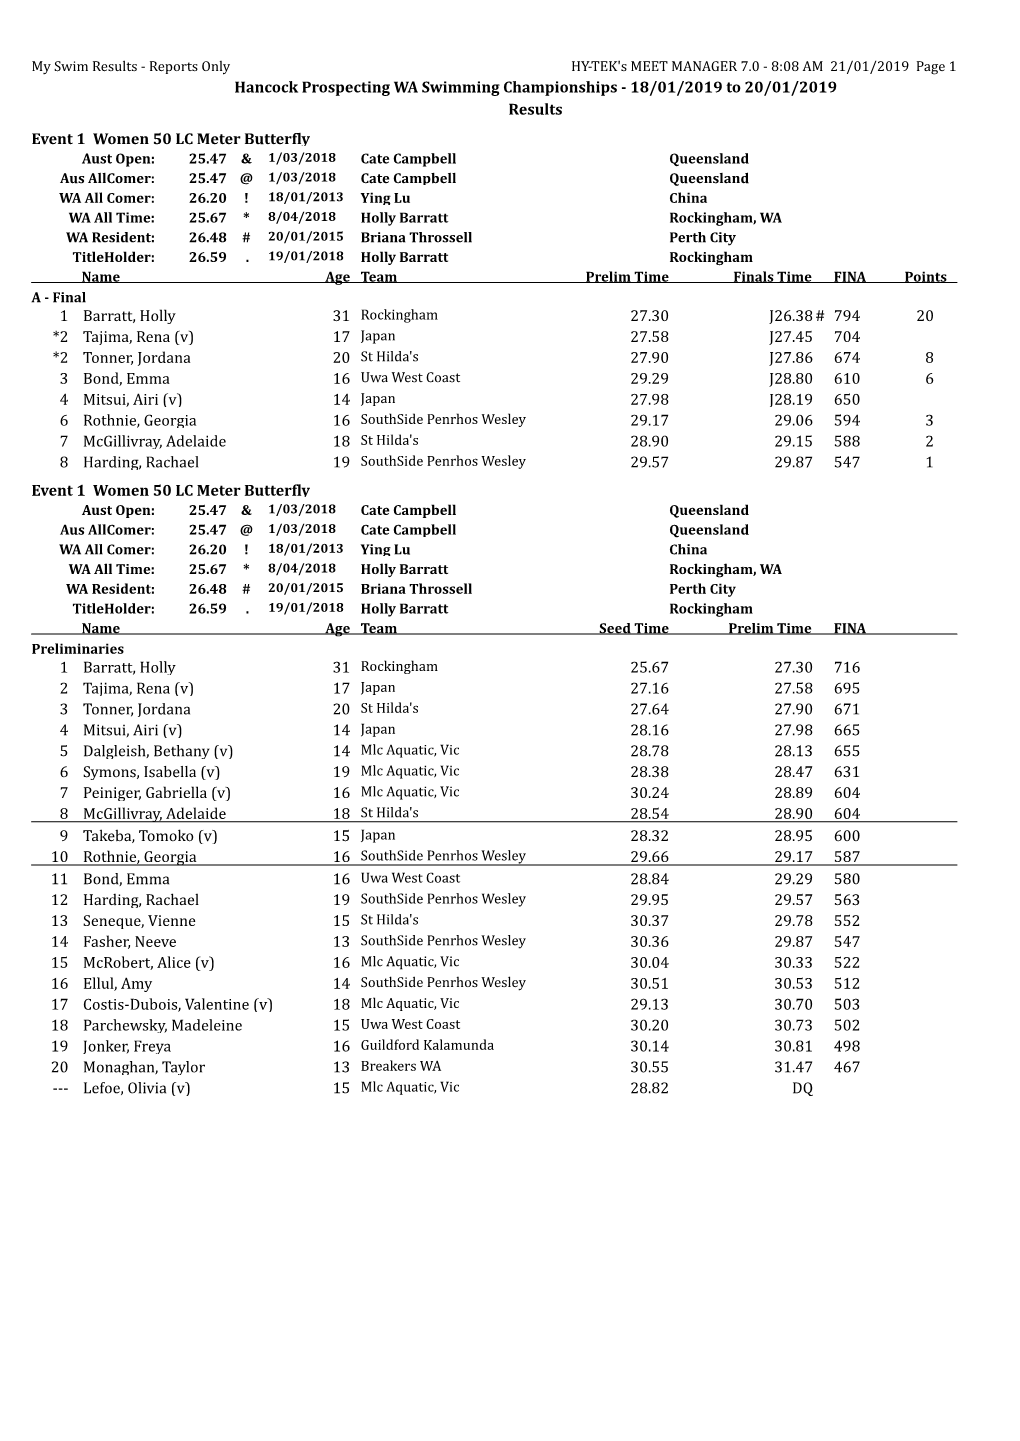 Hancock Prospecting WA Swimming Championships - 18/01/2019 to 20/01/2019 Results